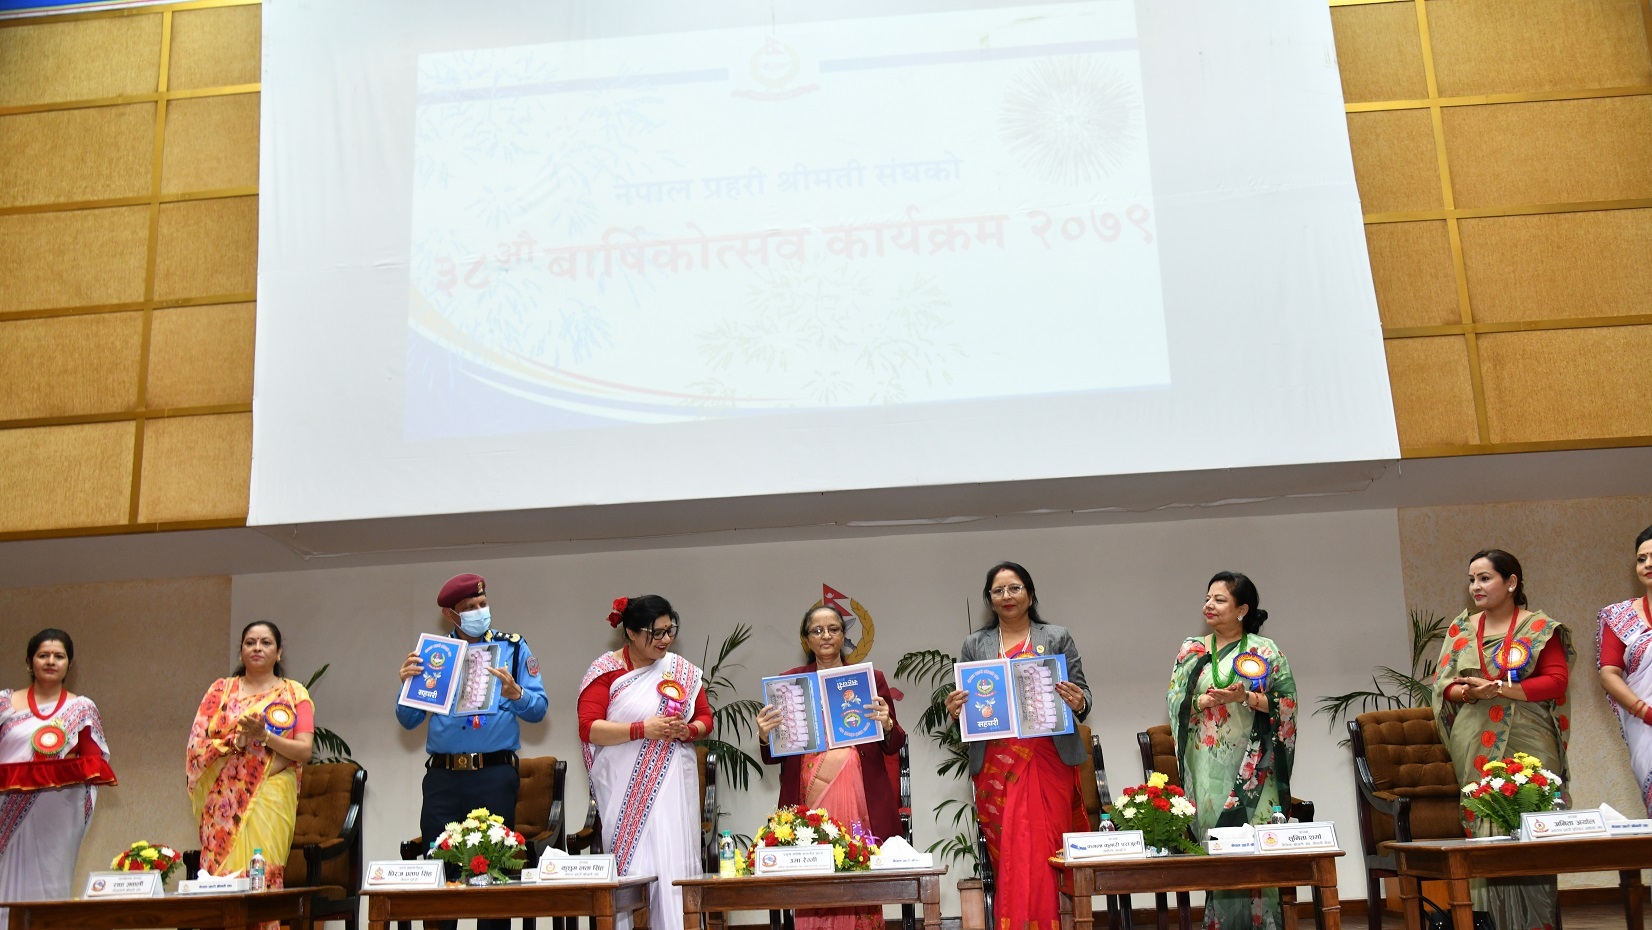 नेपाल प्रहरी श्रीमती संघको ३८औं वार्षिकोत्सव कार्यक्रम सम्पन्न